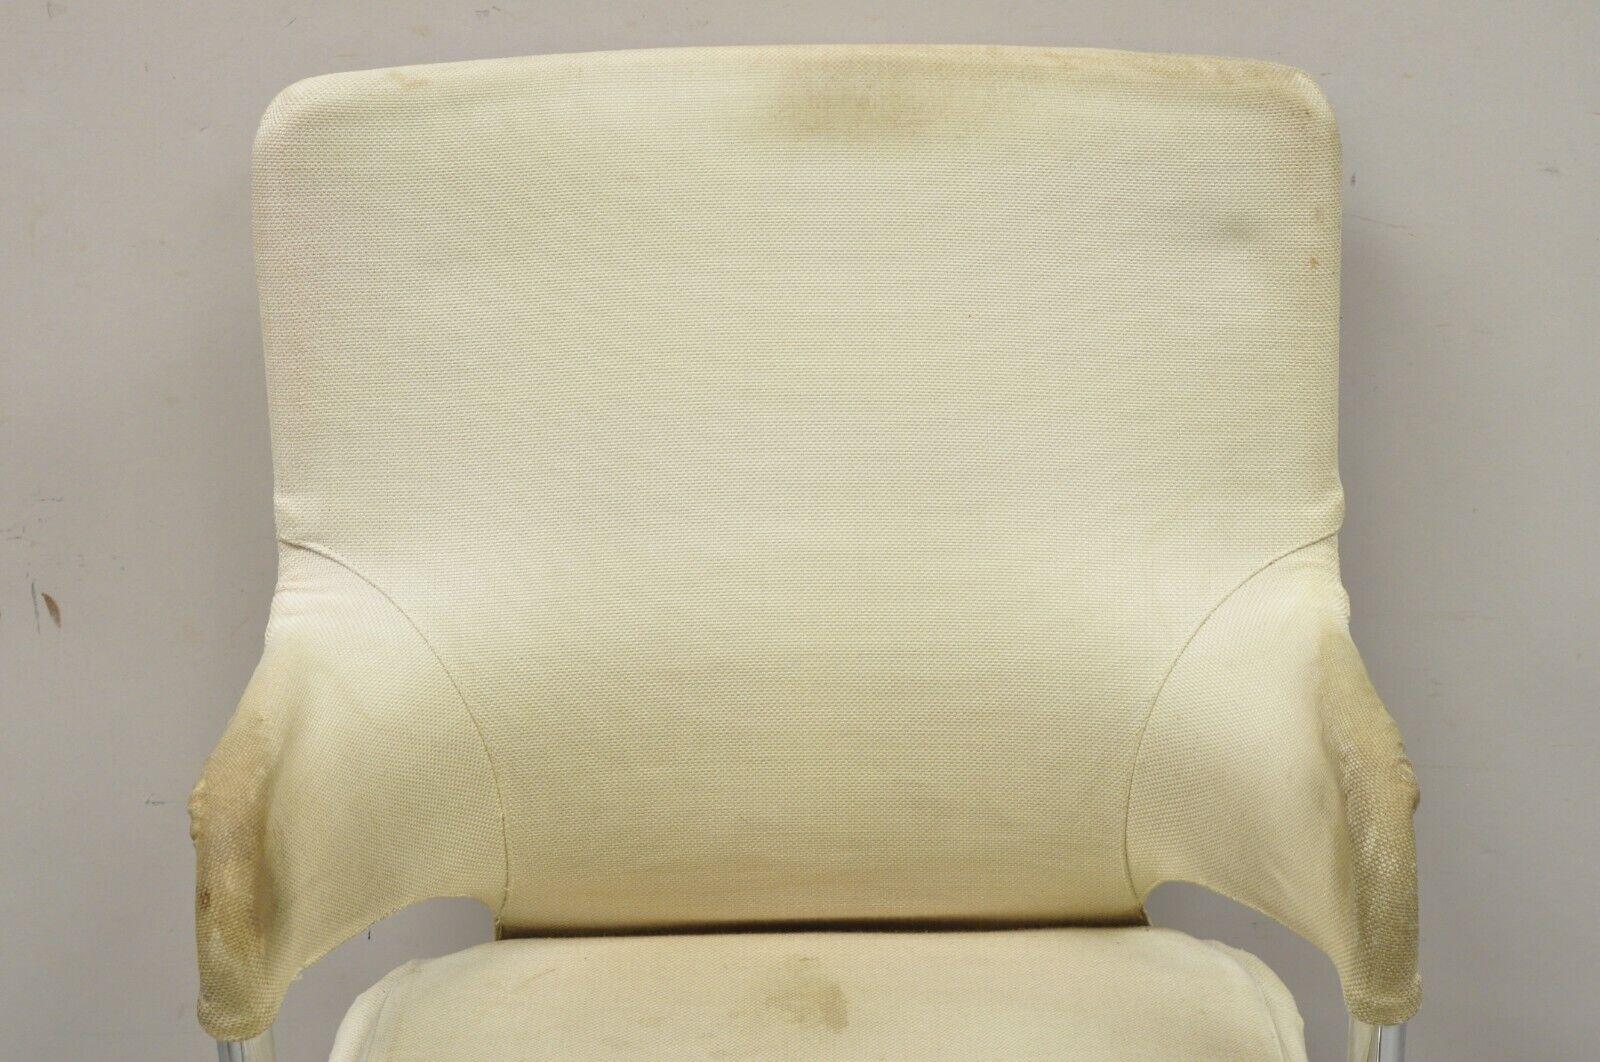 Late 20th Century Vintage Mid-Century Modern Tubular Chrome Arm Chair with Burlap Seat For Sale